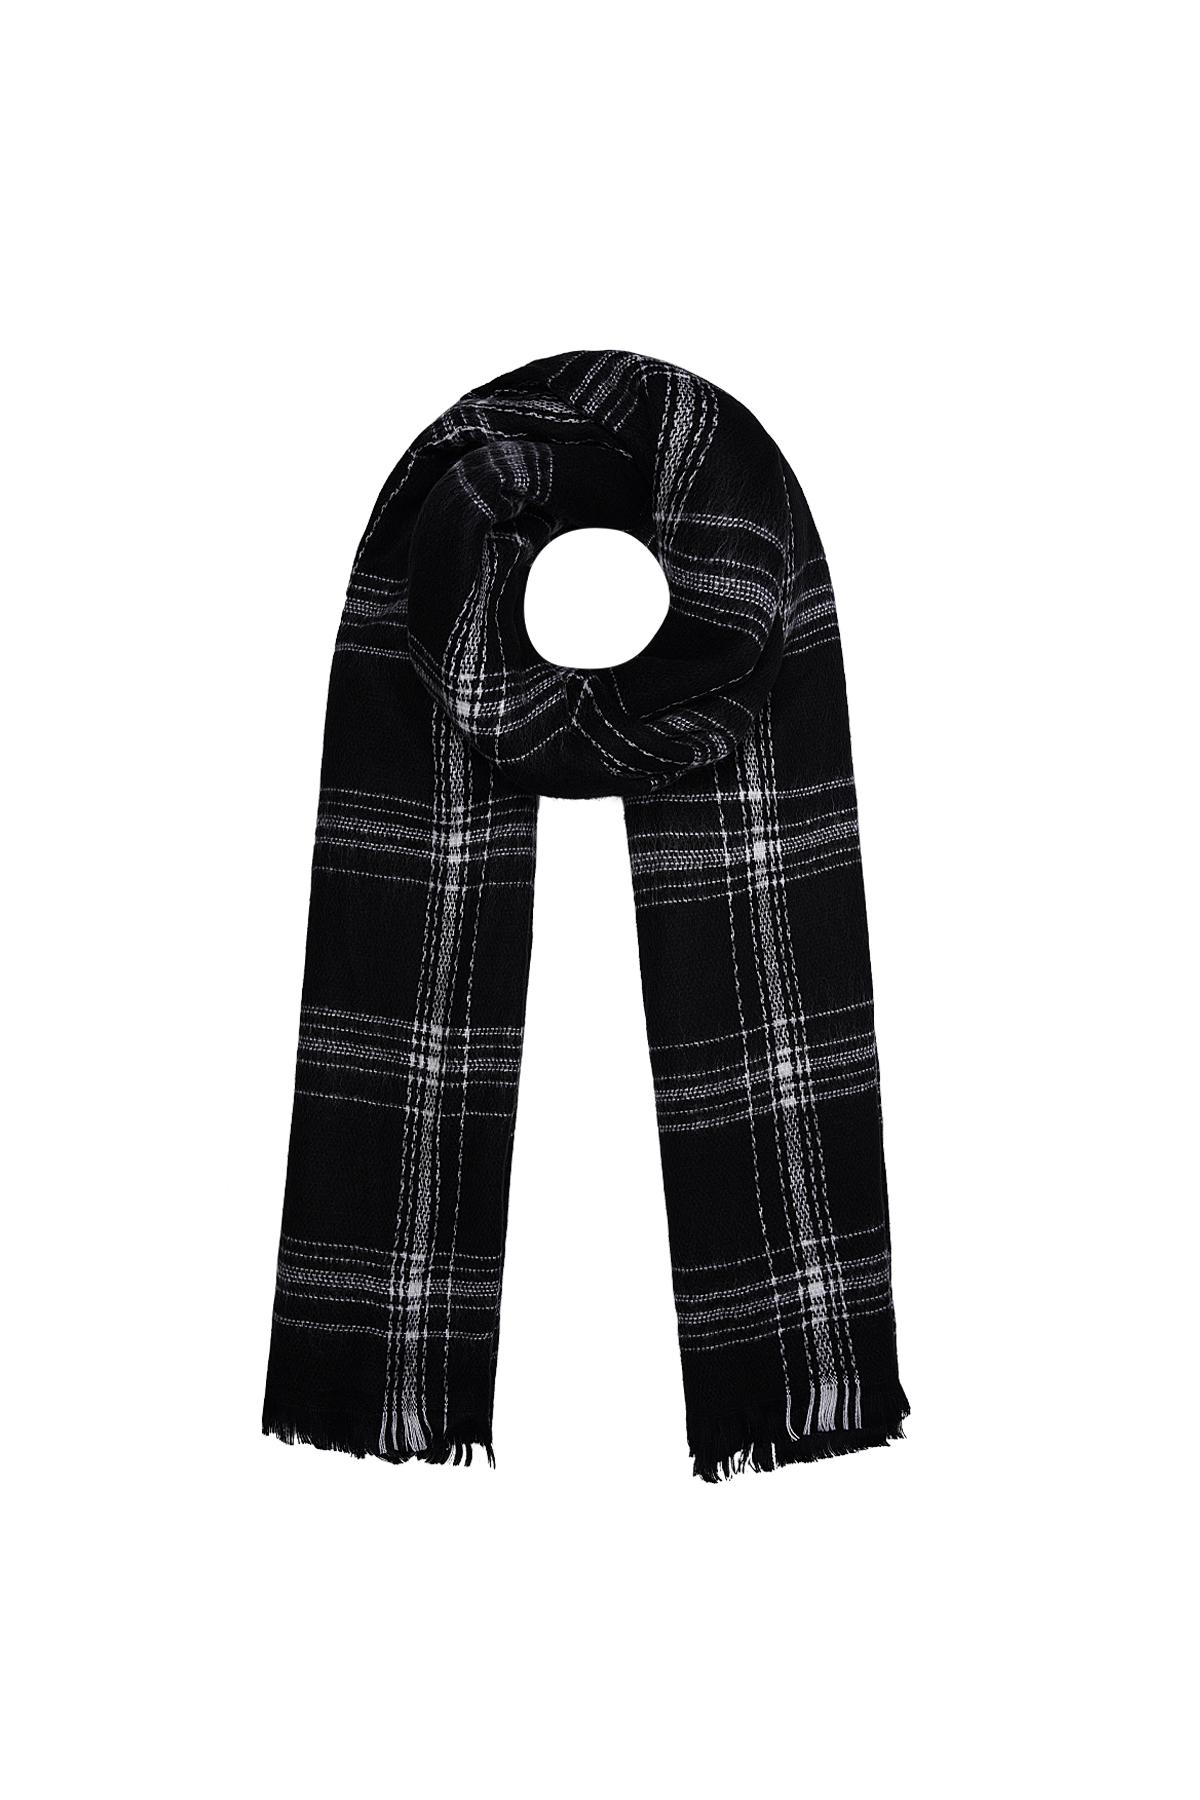 Black winter scarf with white stripes Acrylic